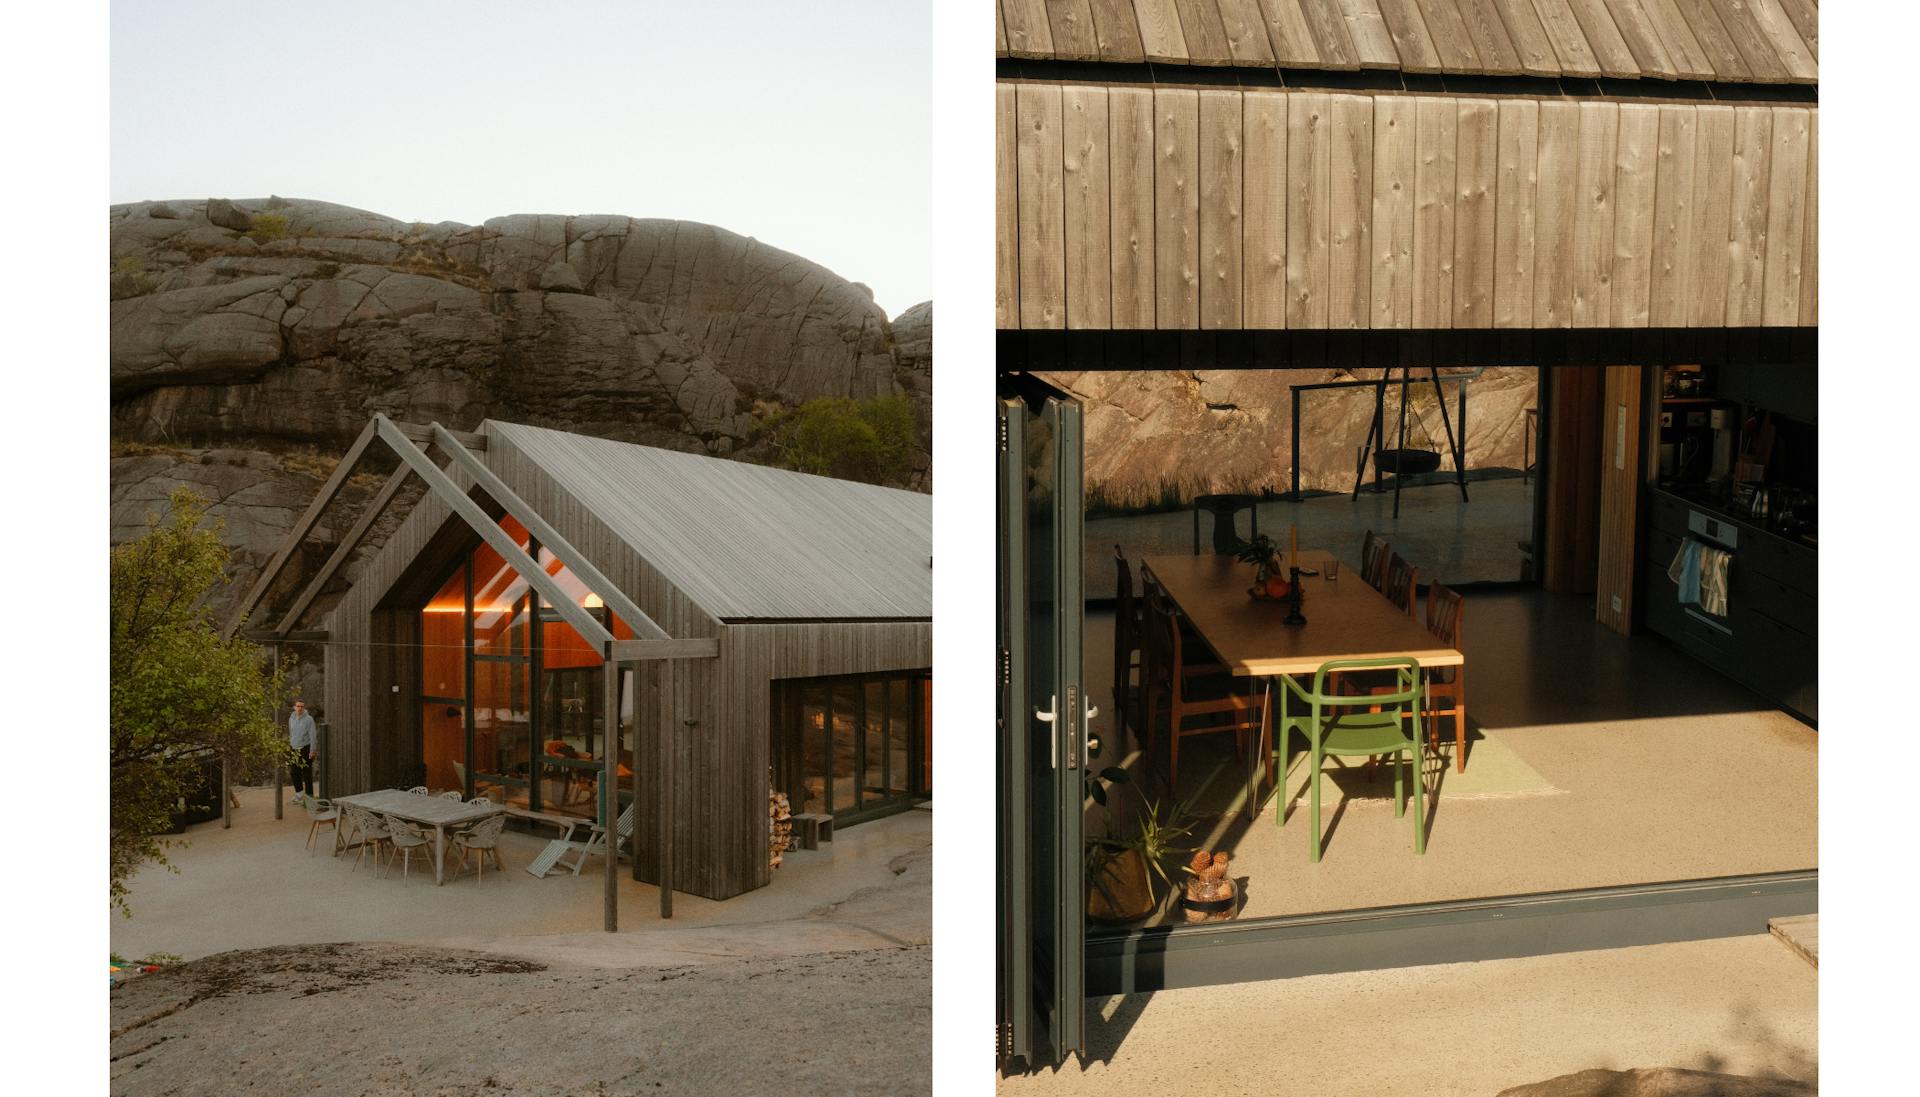 The Landfolk cabin in Western Norway in minimalist design with cliffs surrounding it